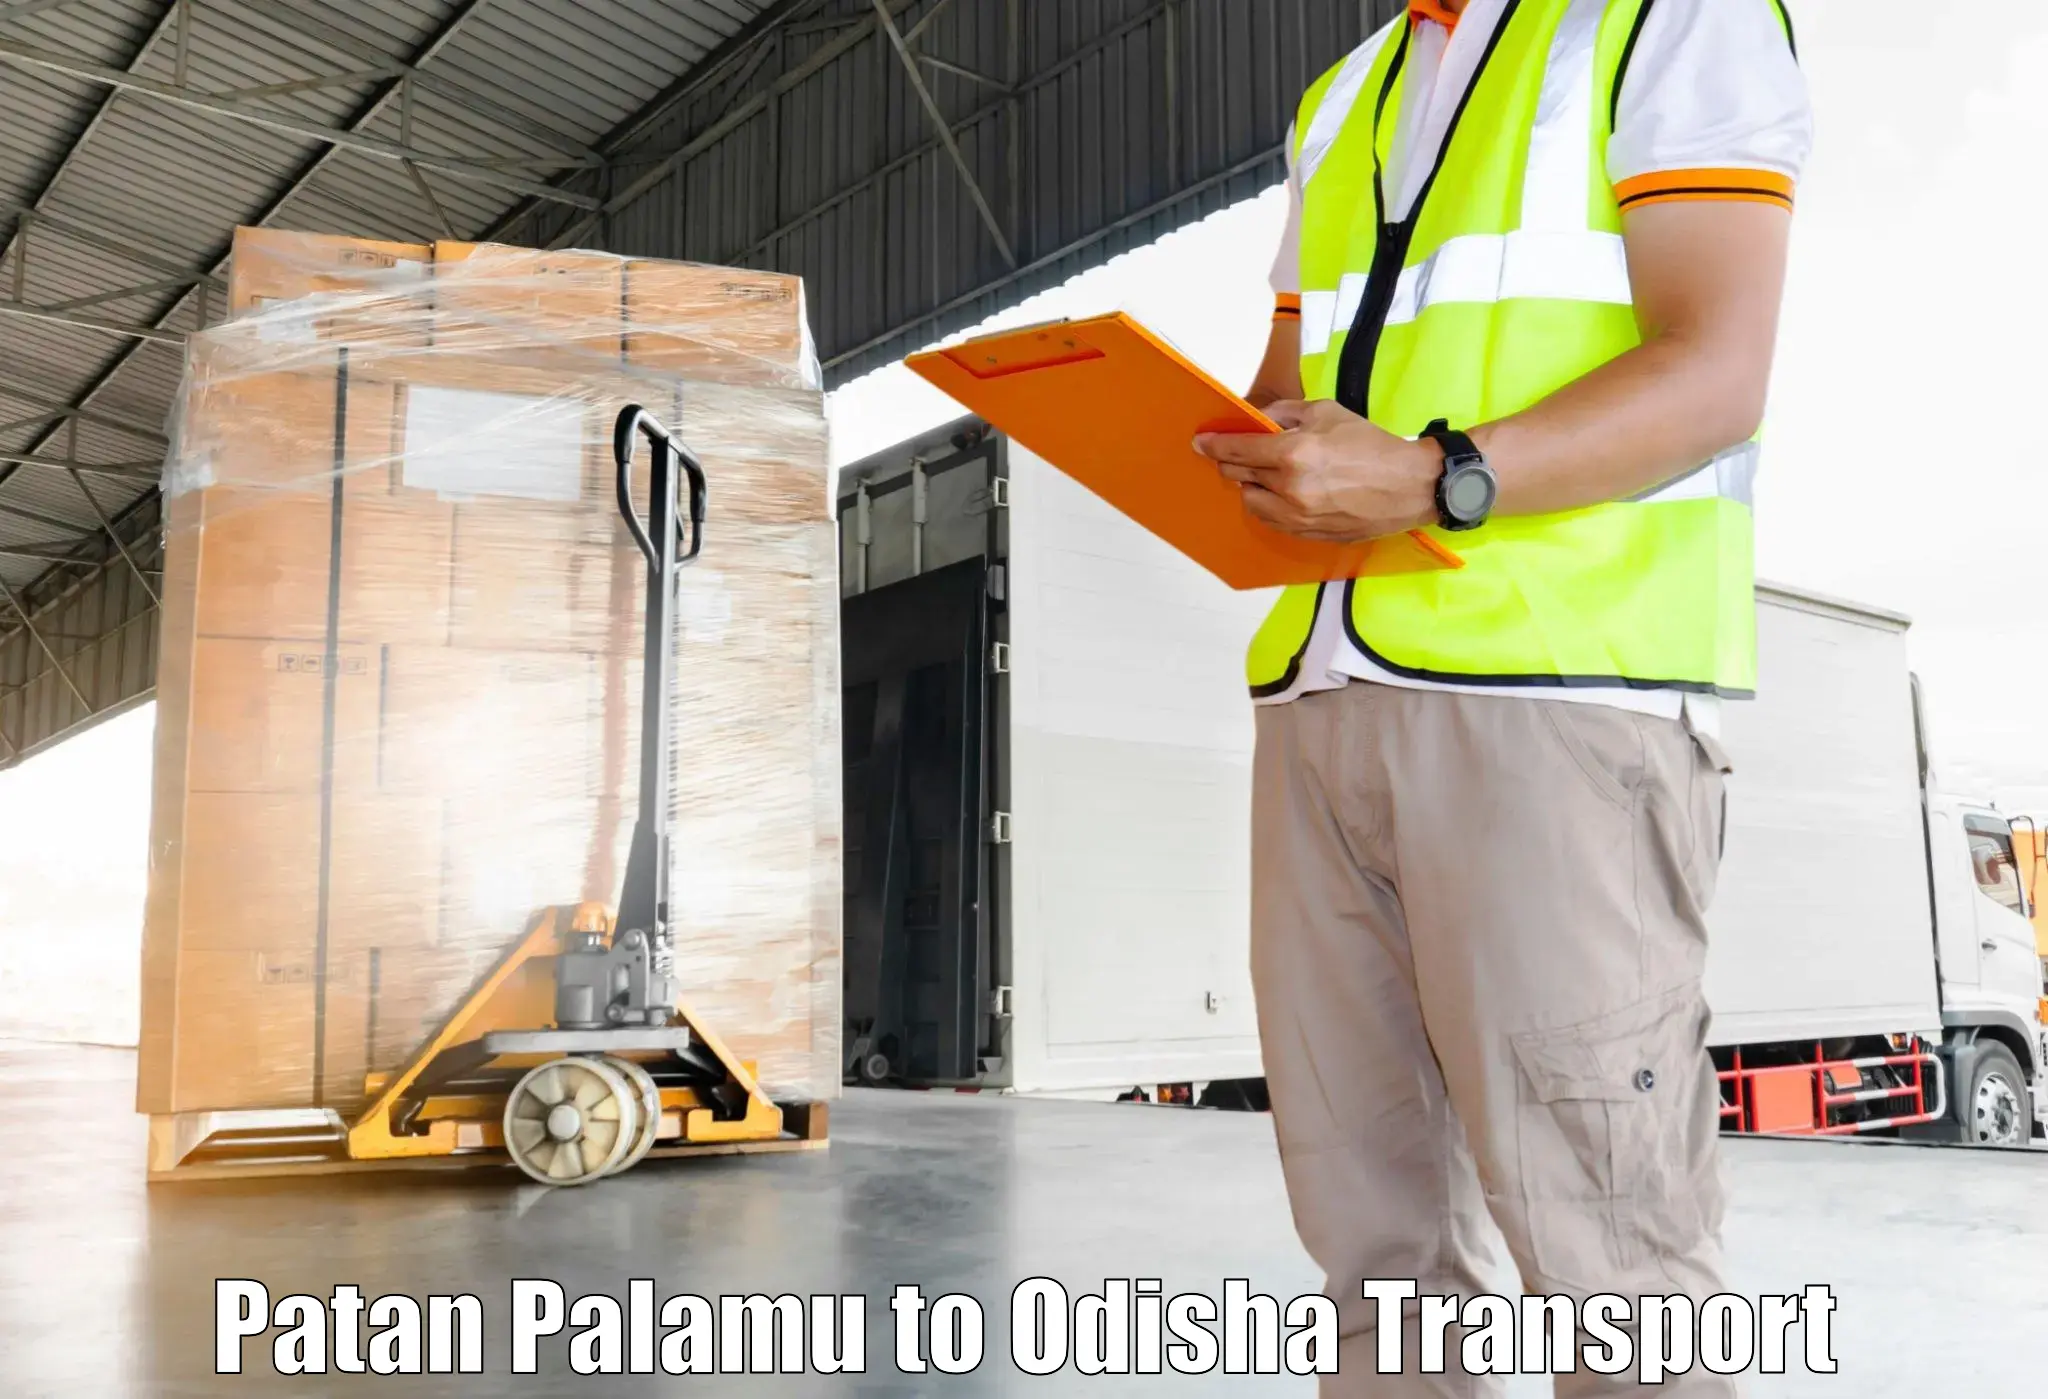 Furniture transport service Patan Palamu to Sohela